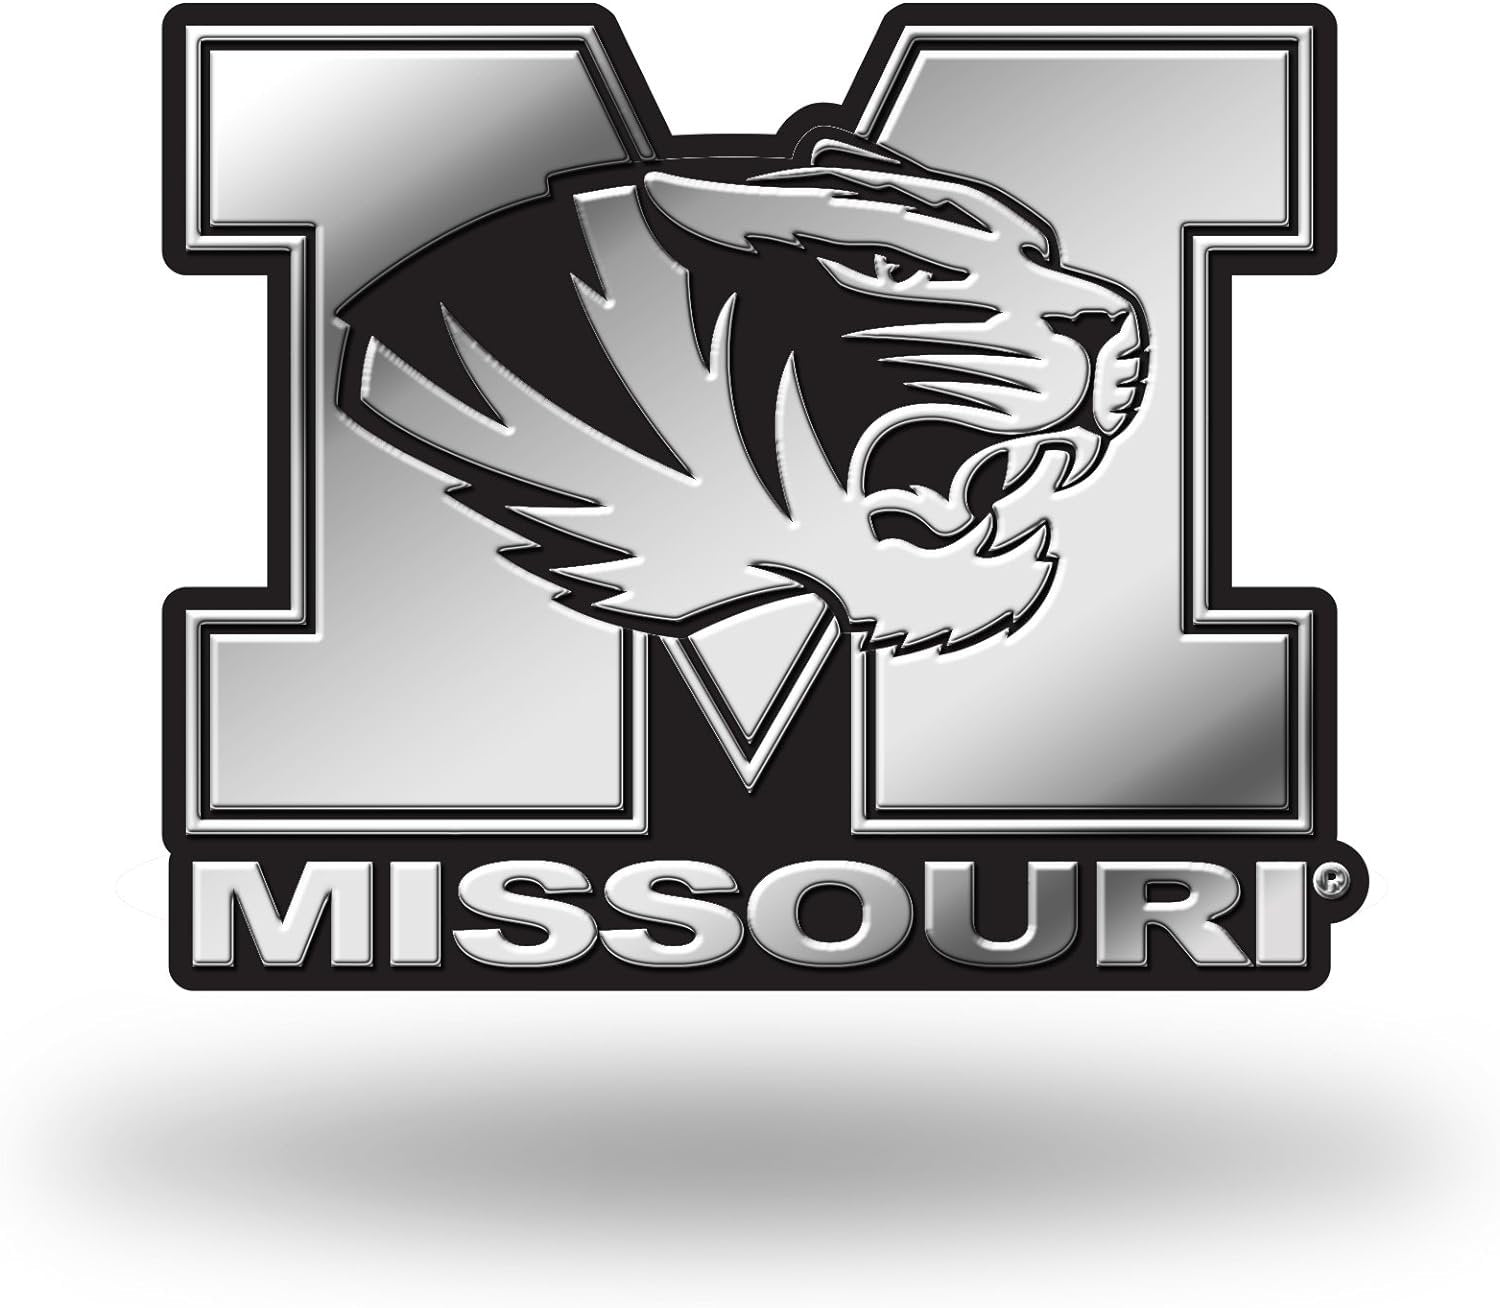 University of Missouri Tigers Auto Emblem, Silver Chrome Color, Raised Molded Plastic, 3.5 Inch, Adhesive Tape Backing